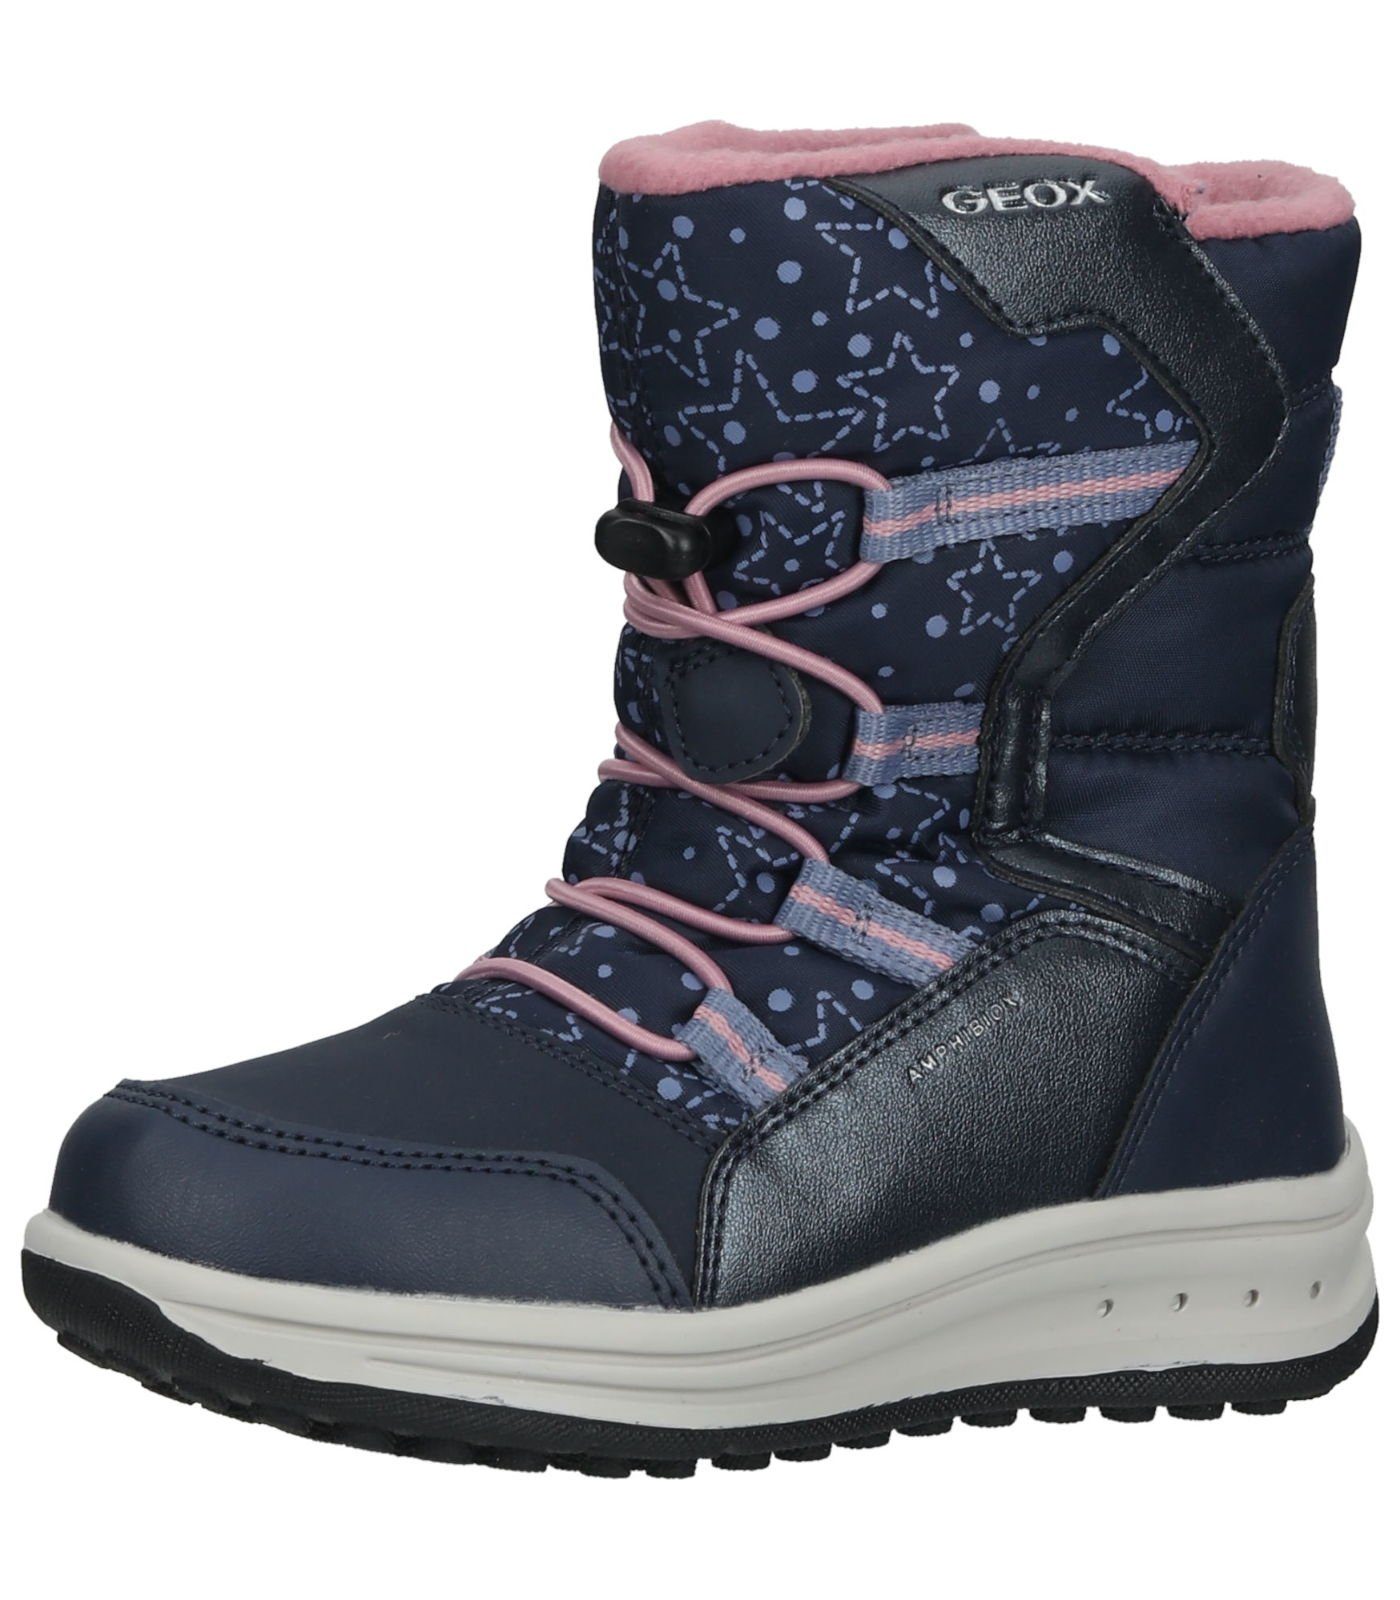 Geox Stiefel Lederimitat/Textil Winterstiefel Navy Pink